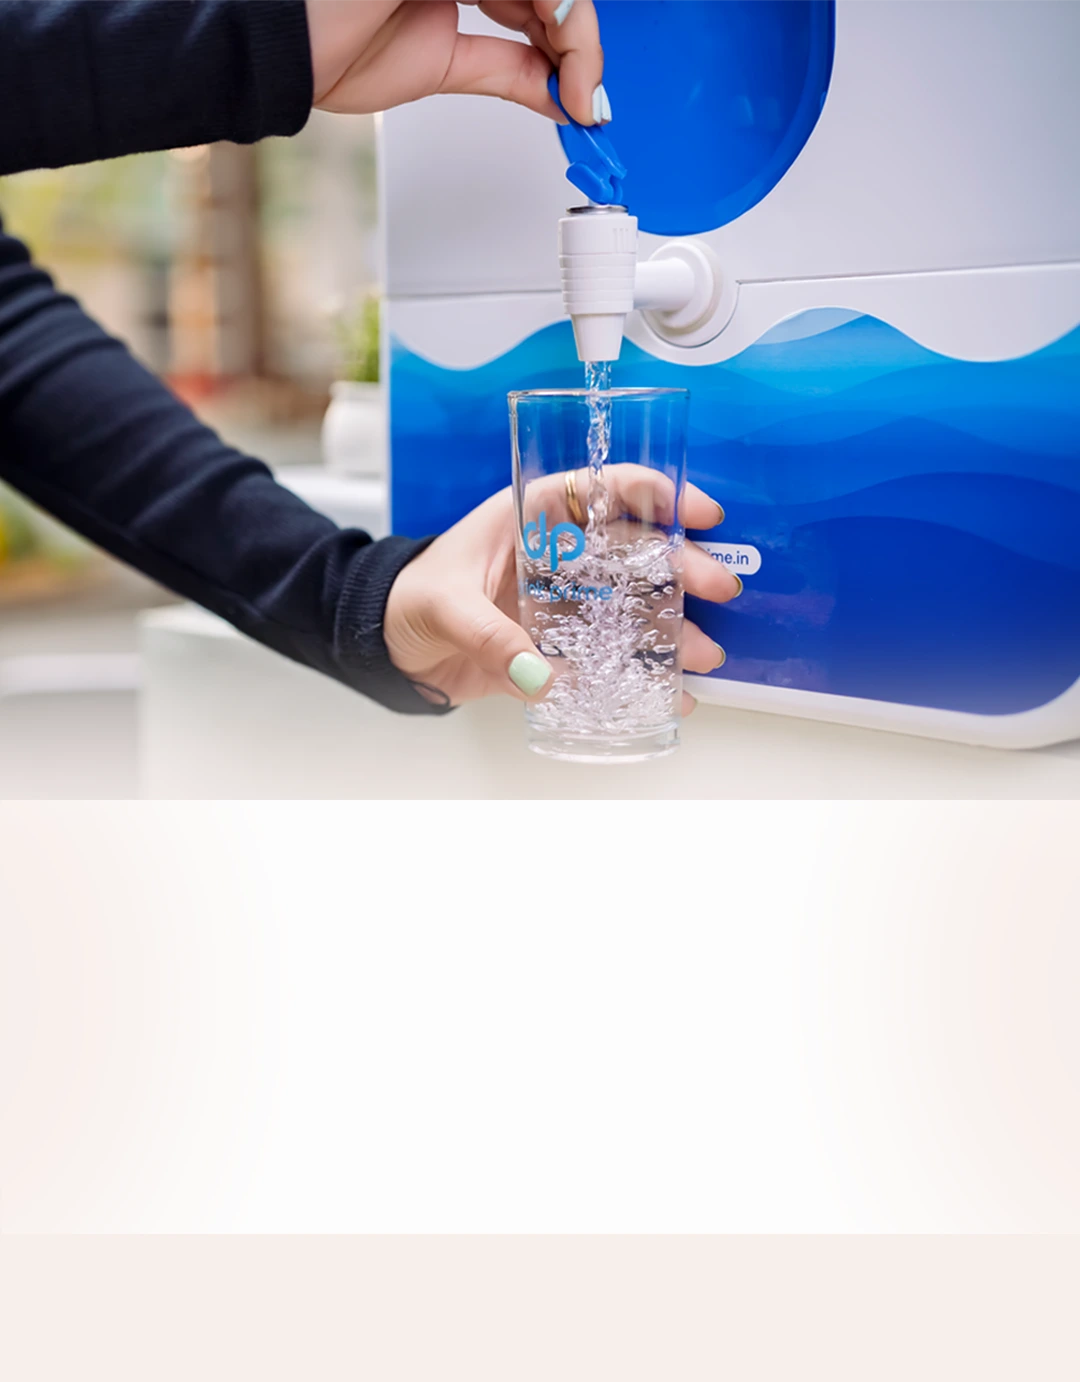 DrinkPrime India's Smartest RO Water Purifier on Subscription, Bengaluru